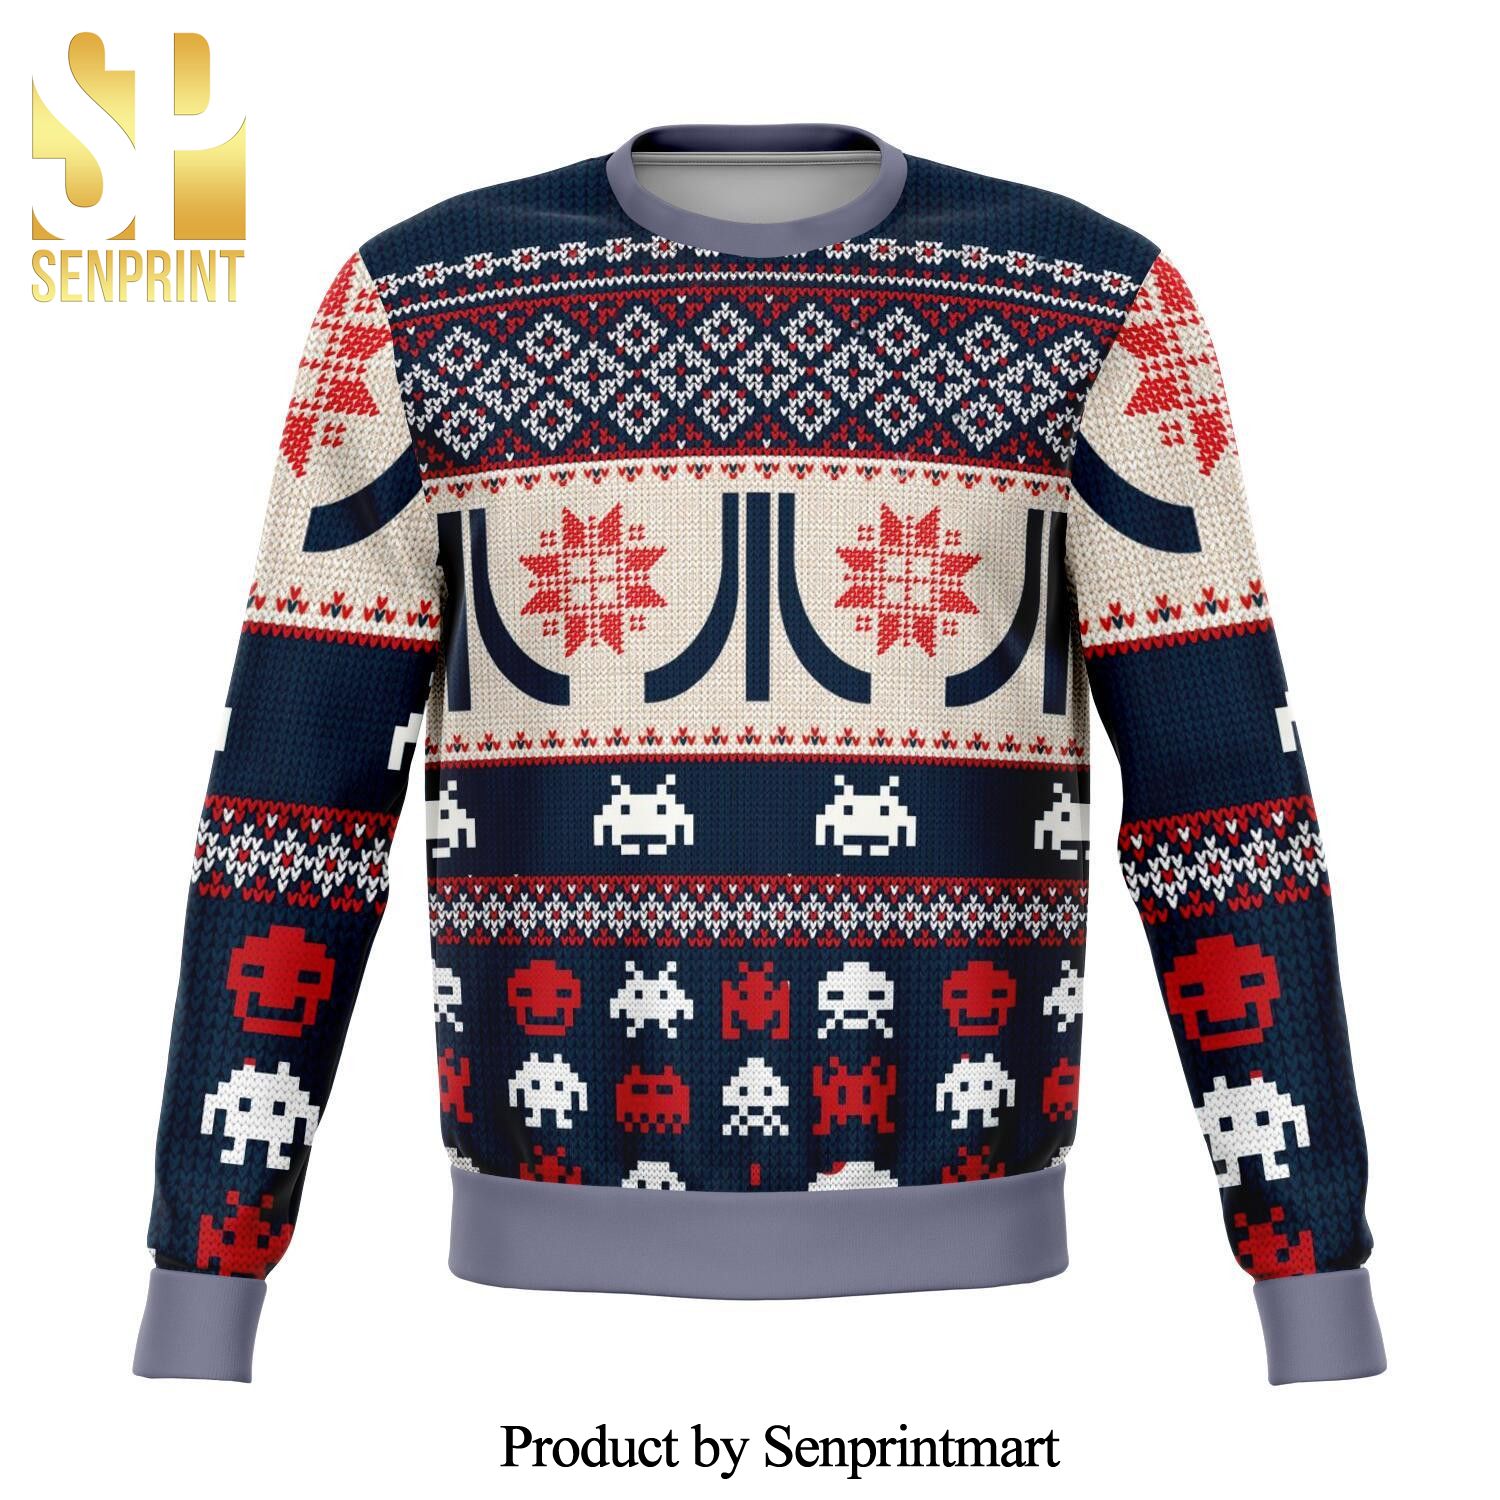 Atari Premium Knitted Ugly Christmas Sweater